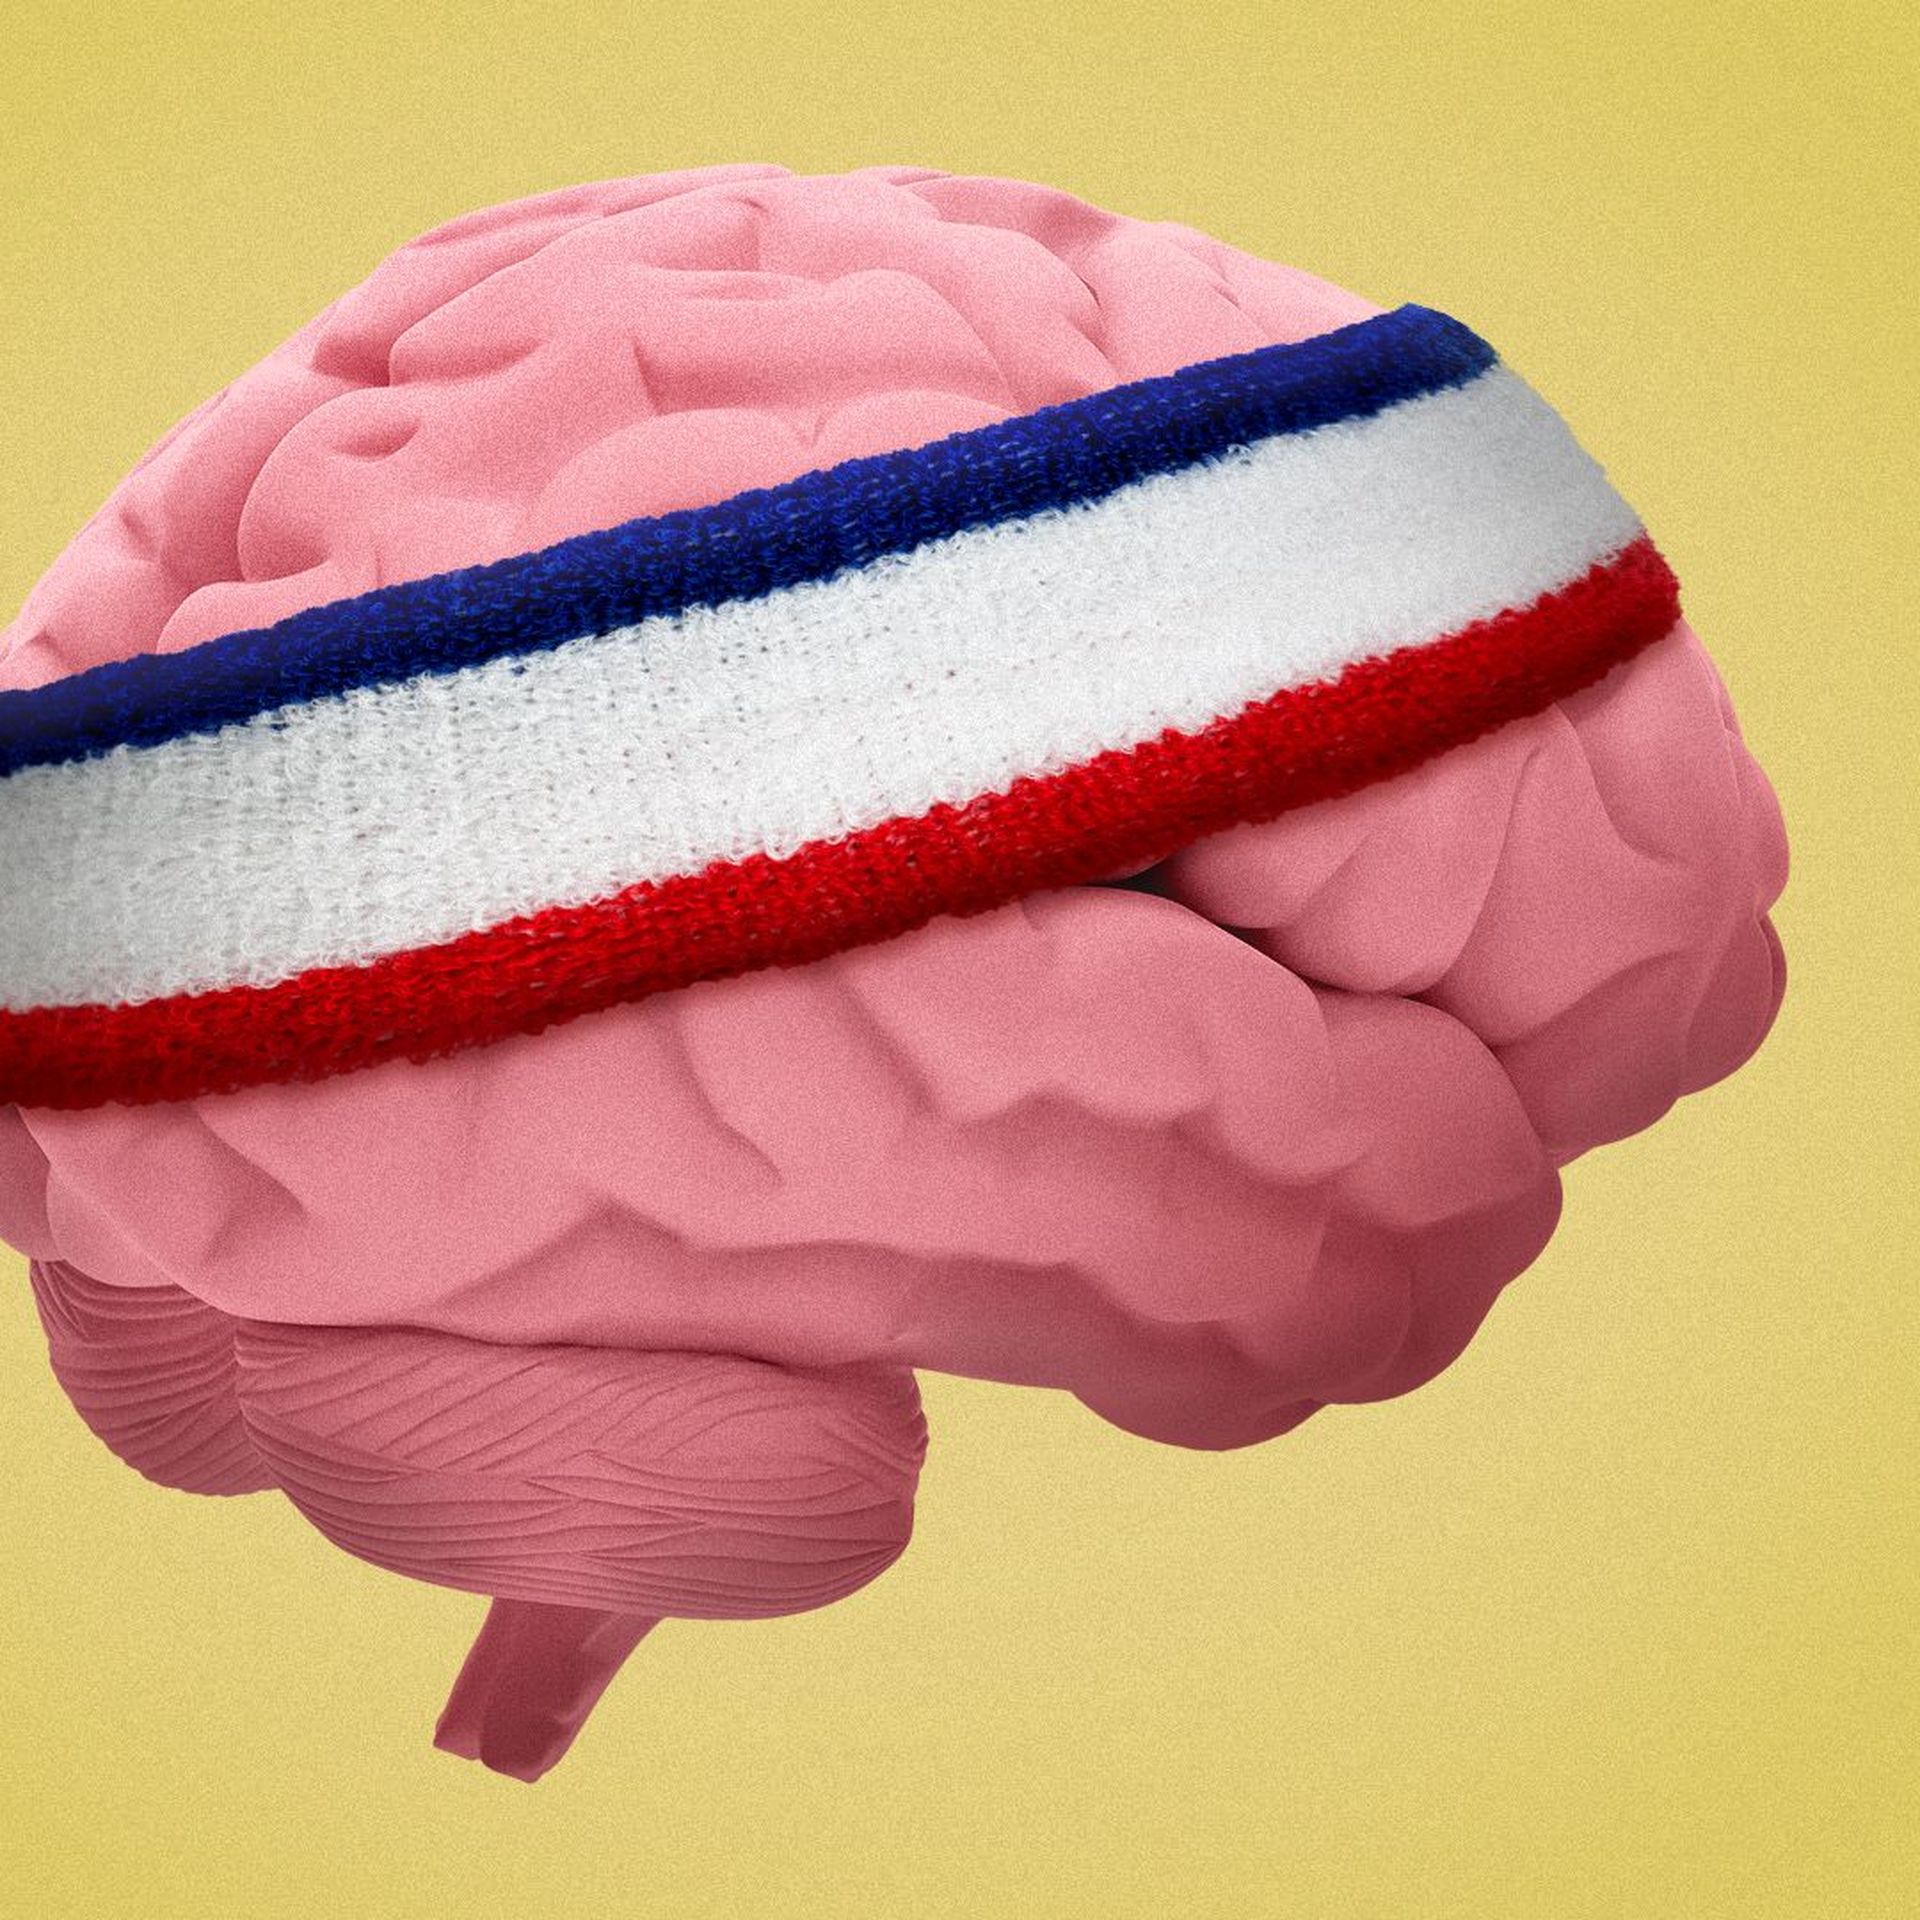 Illustration of a brain wearing a sweatband.